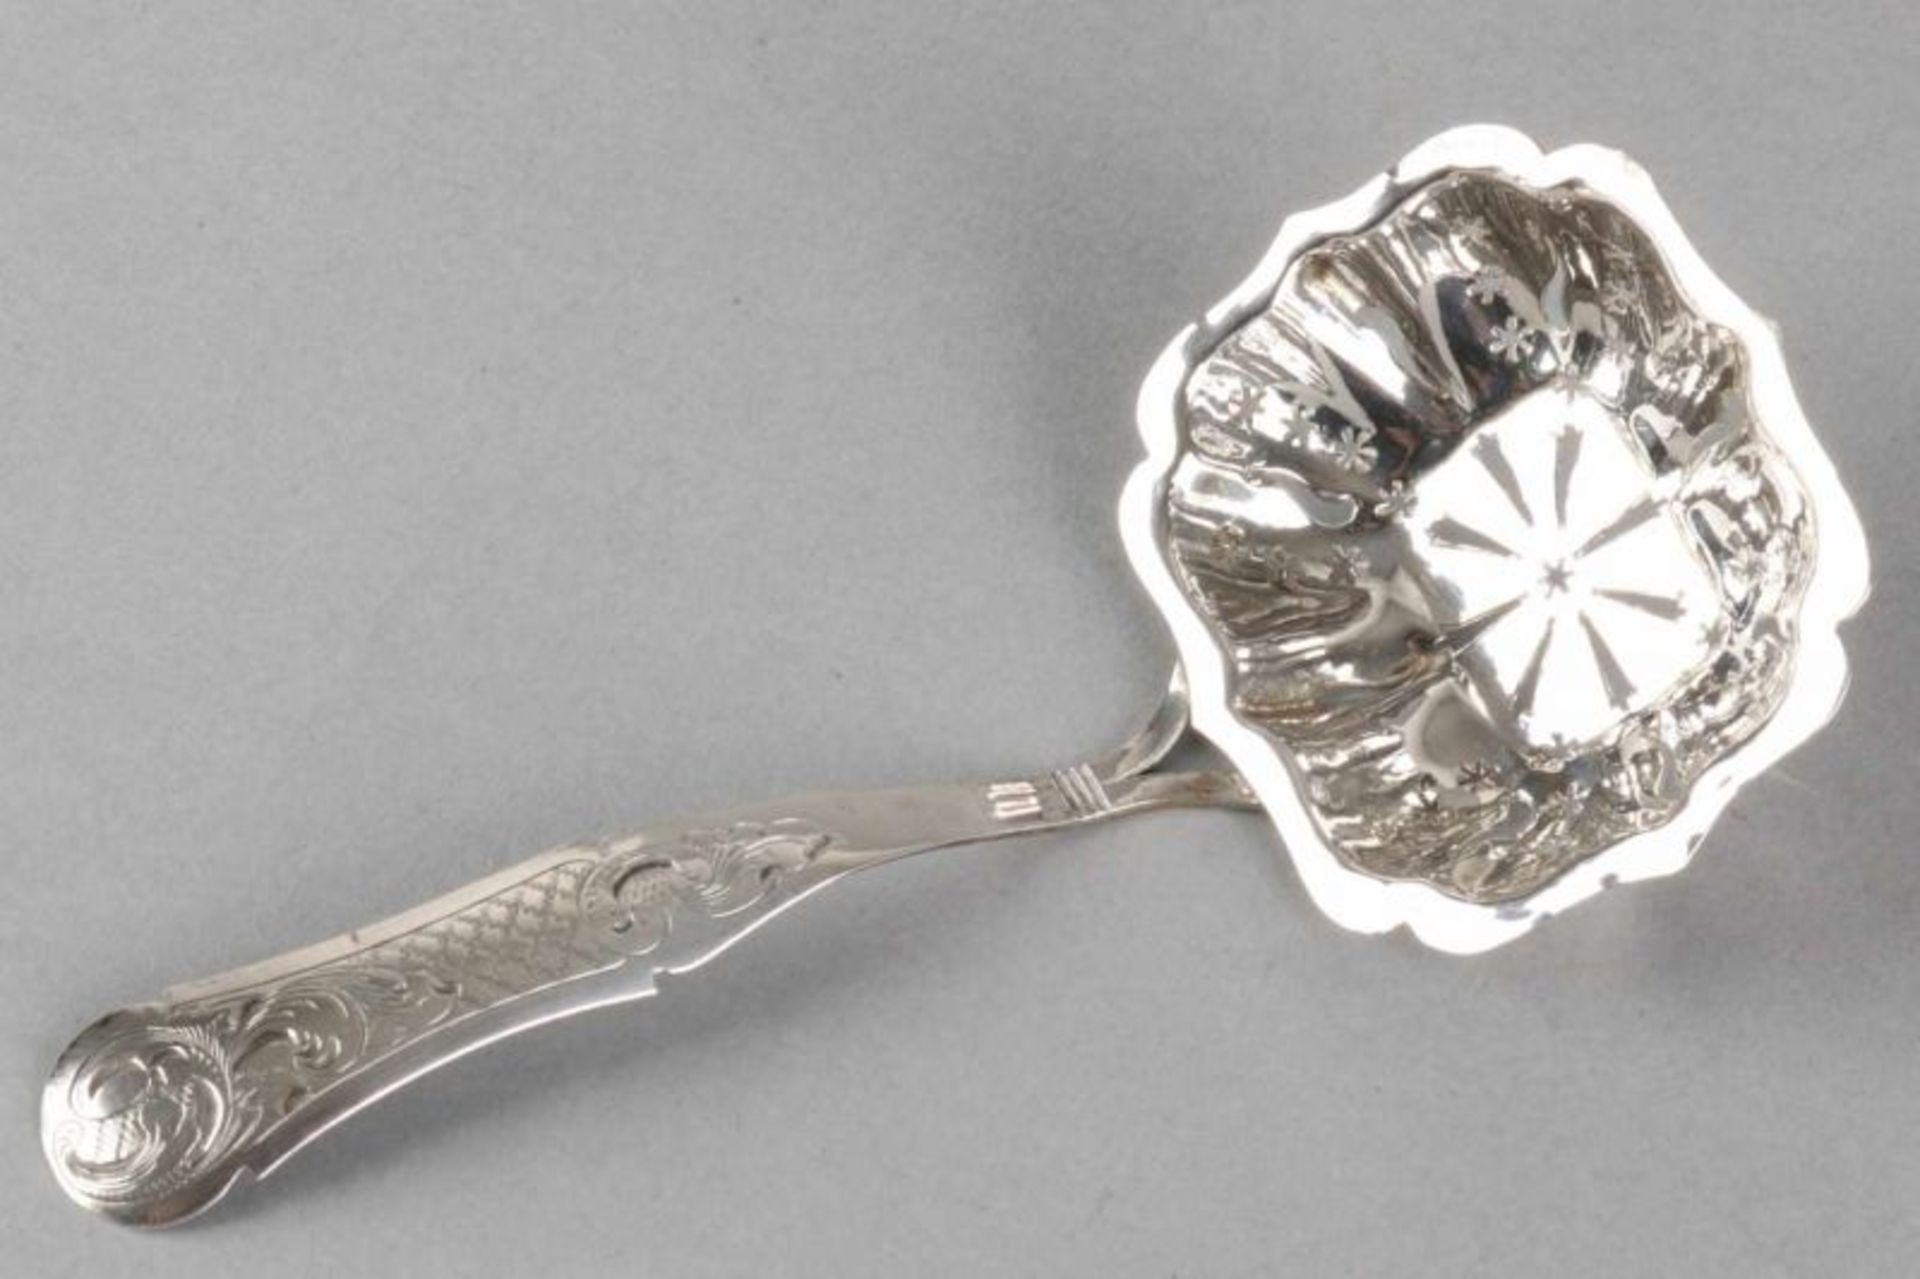 Antique silver sugar spoon, 835/000, open-ended contoured tray with engraved steel. MT: J. van de